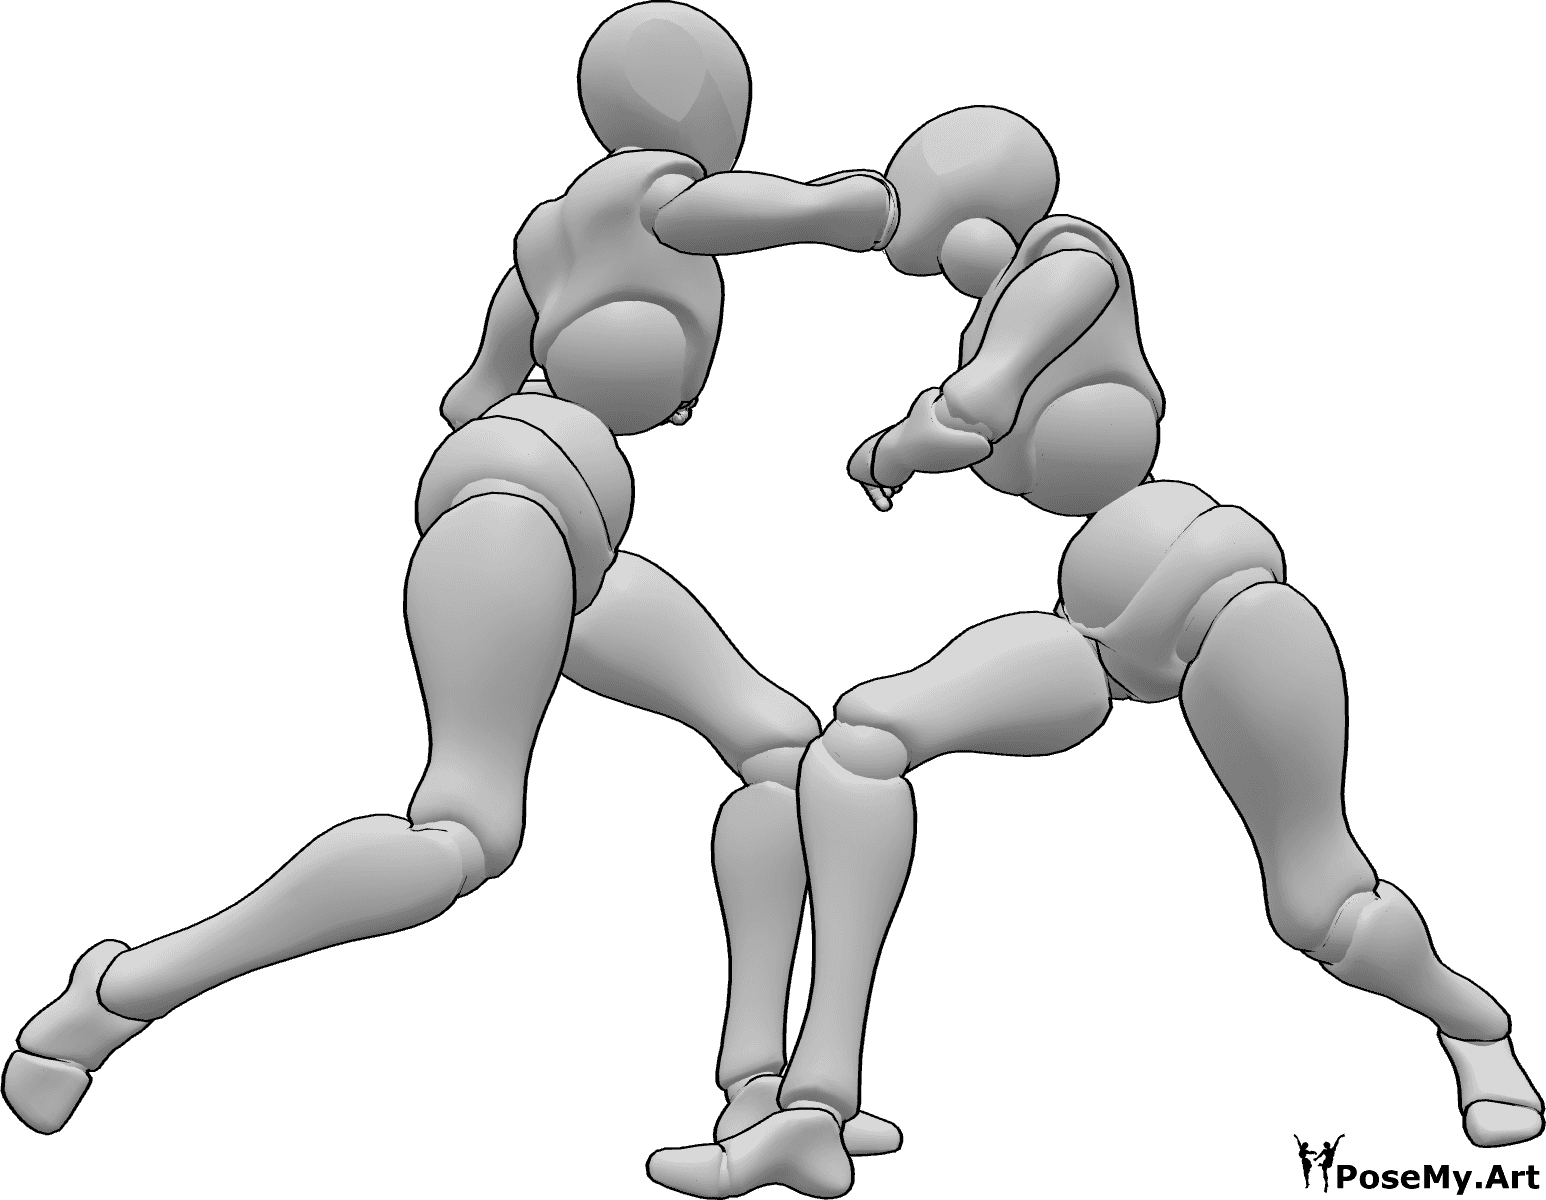 Referencia de poses- Pose de ataque femenina - Hembra ataca a la otra hembra con un codazo, referencia de pose de ataque femenina